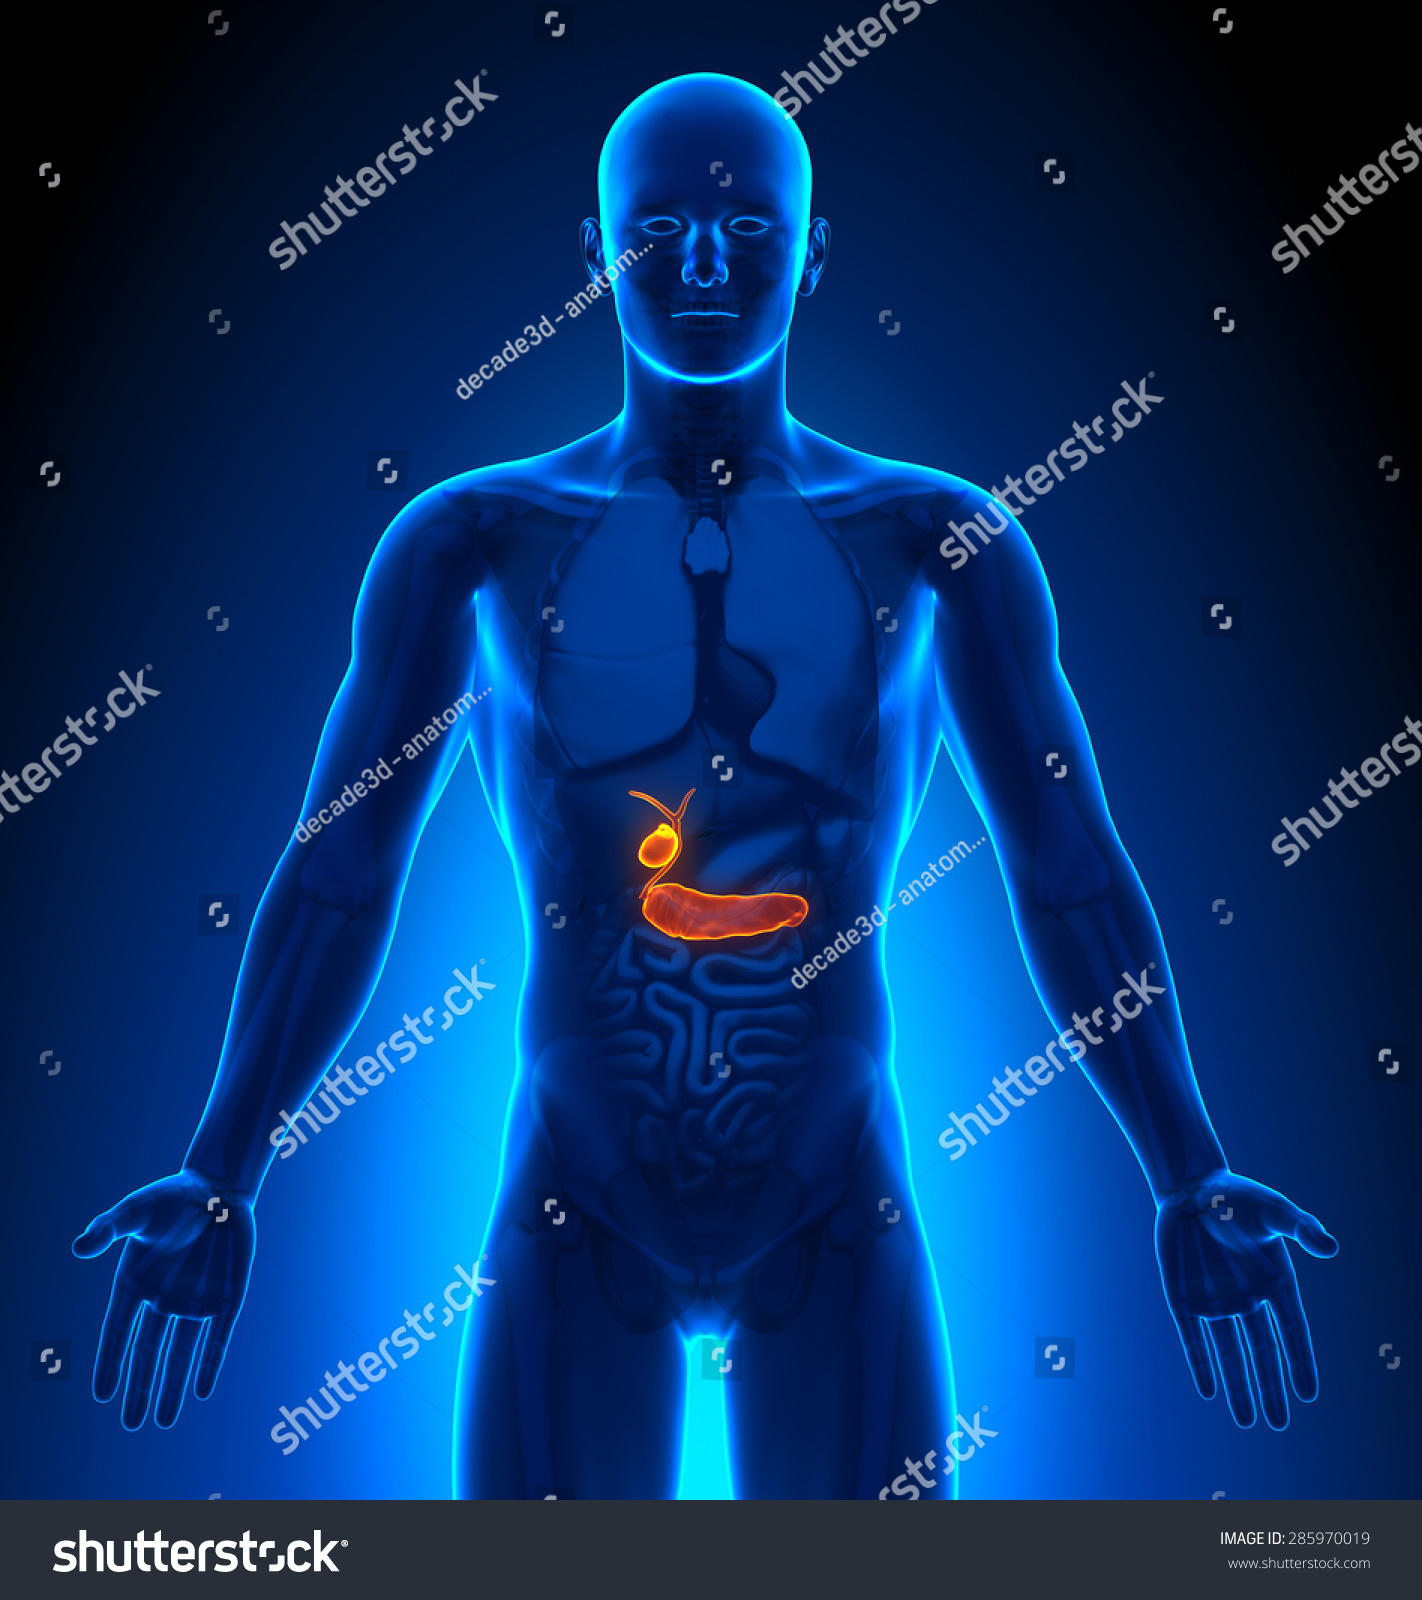 Gallbladder - Male Organs Human Anatomy Stock Photo 285970019 ...